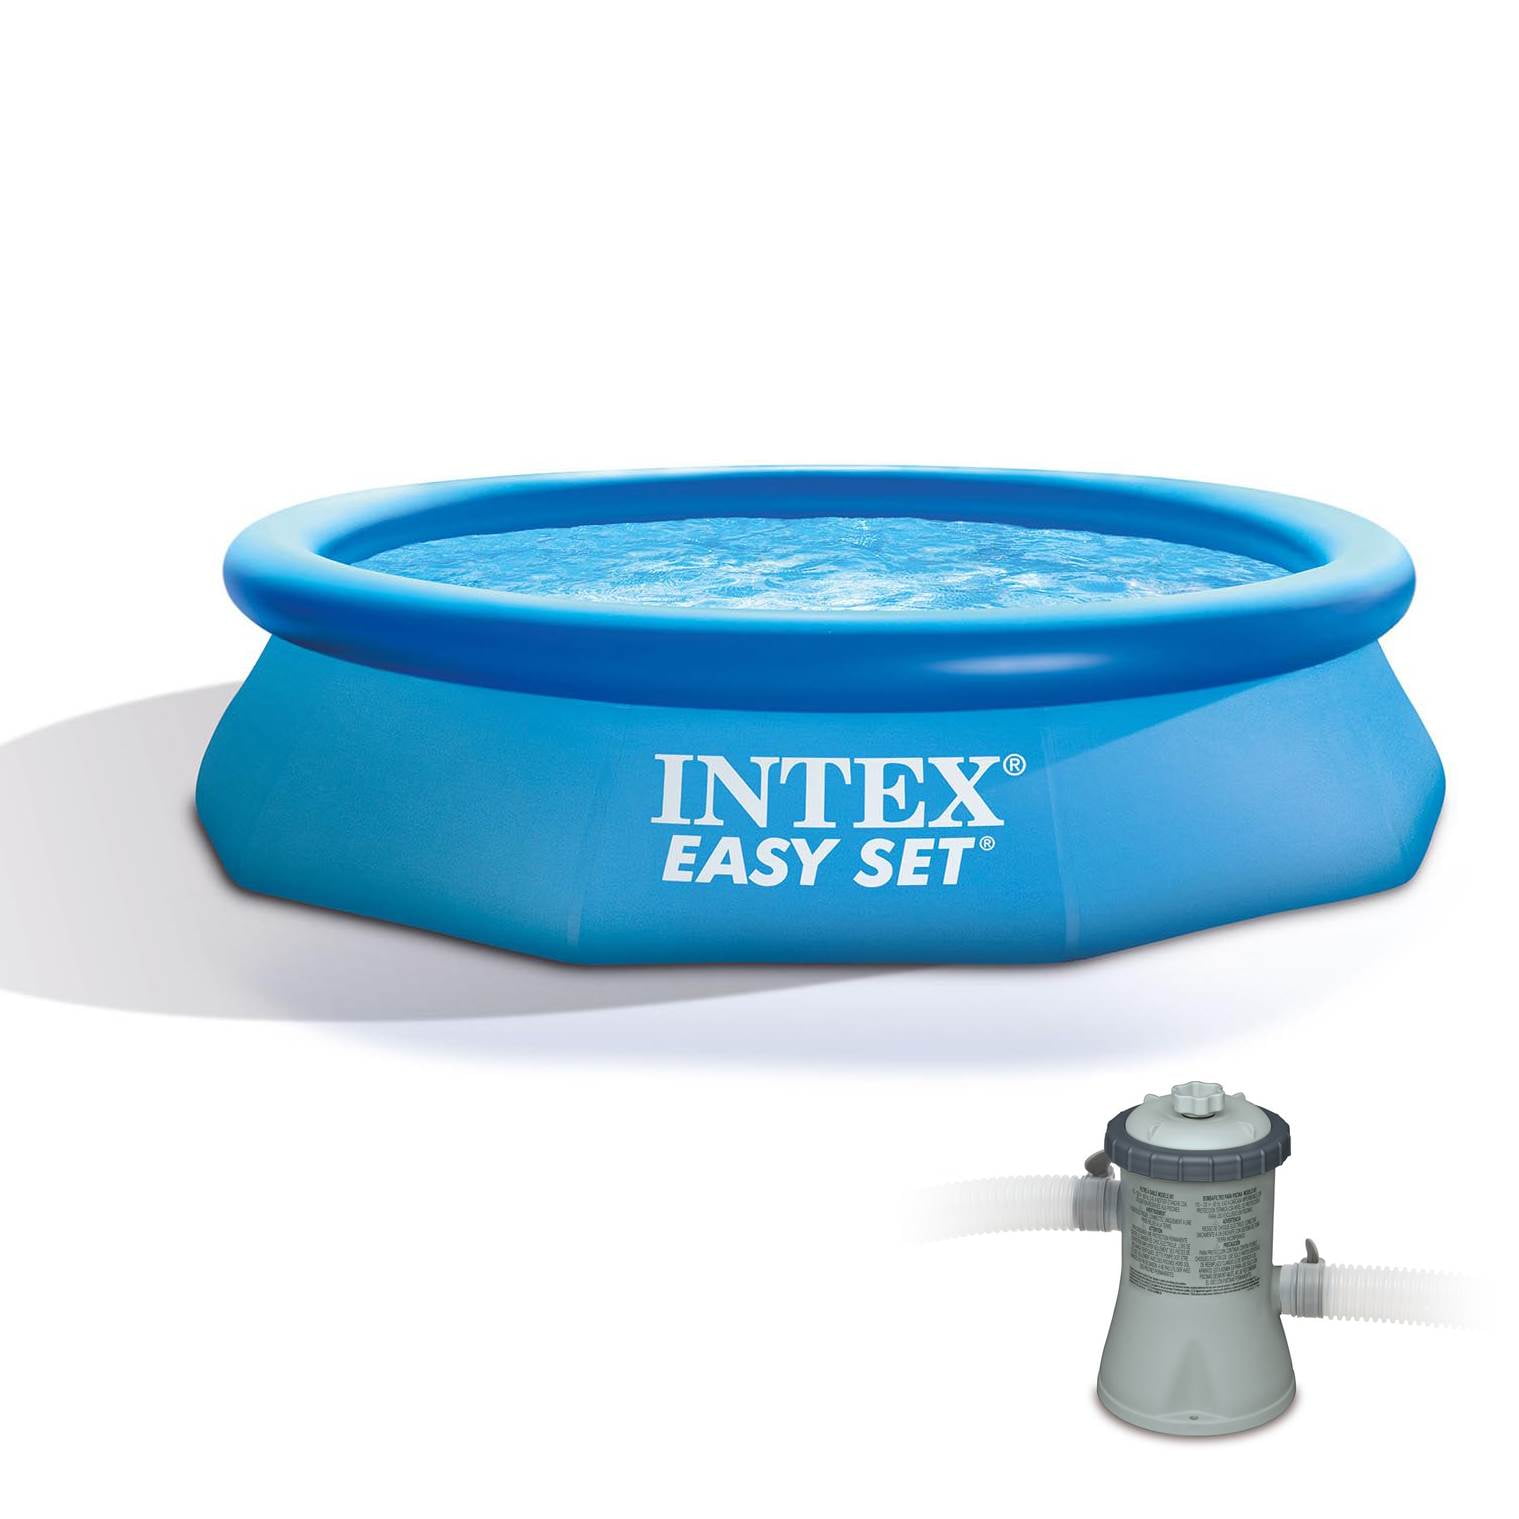 Intex 6ft X 20in Hello Kitty Easy Set Pool